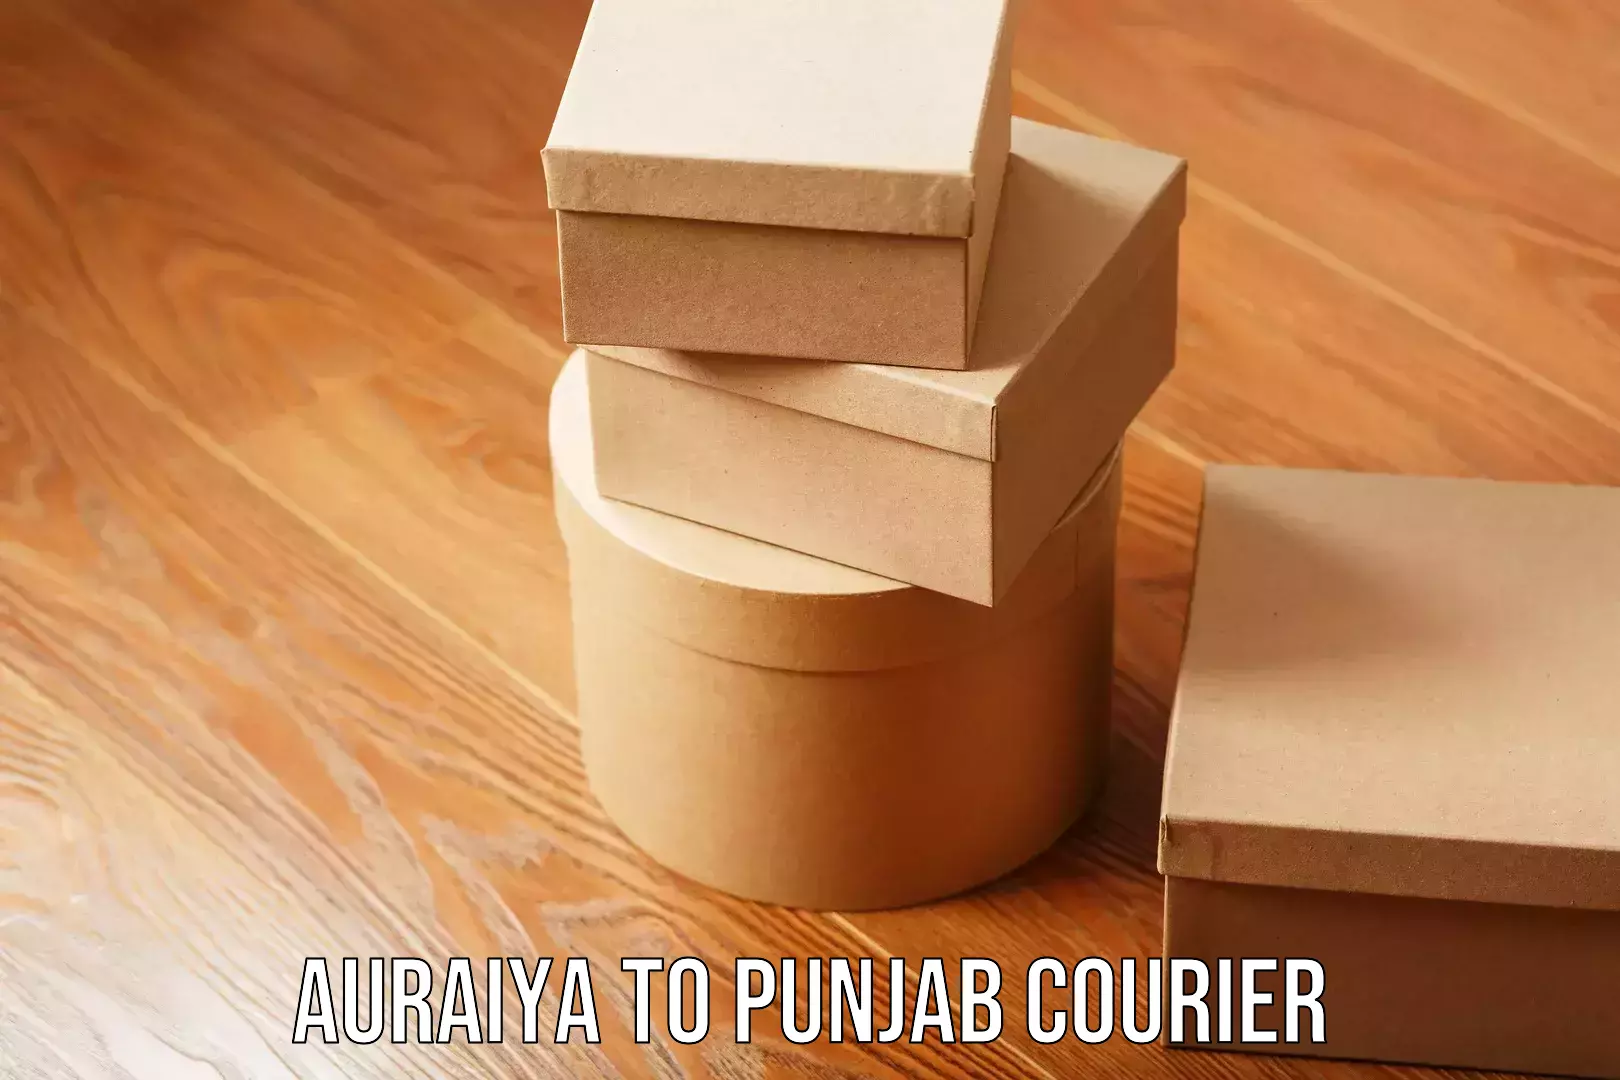 Express logistics providers Auraiya to Punjab